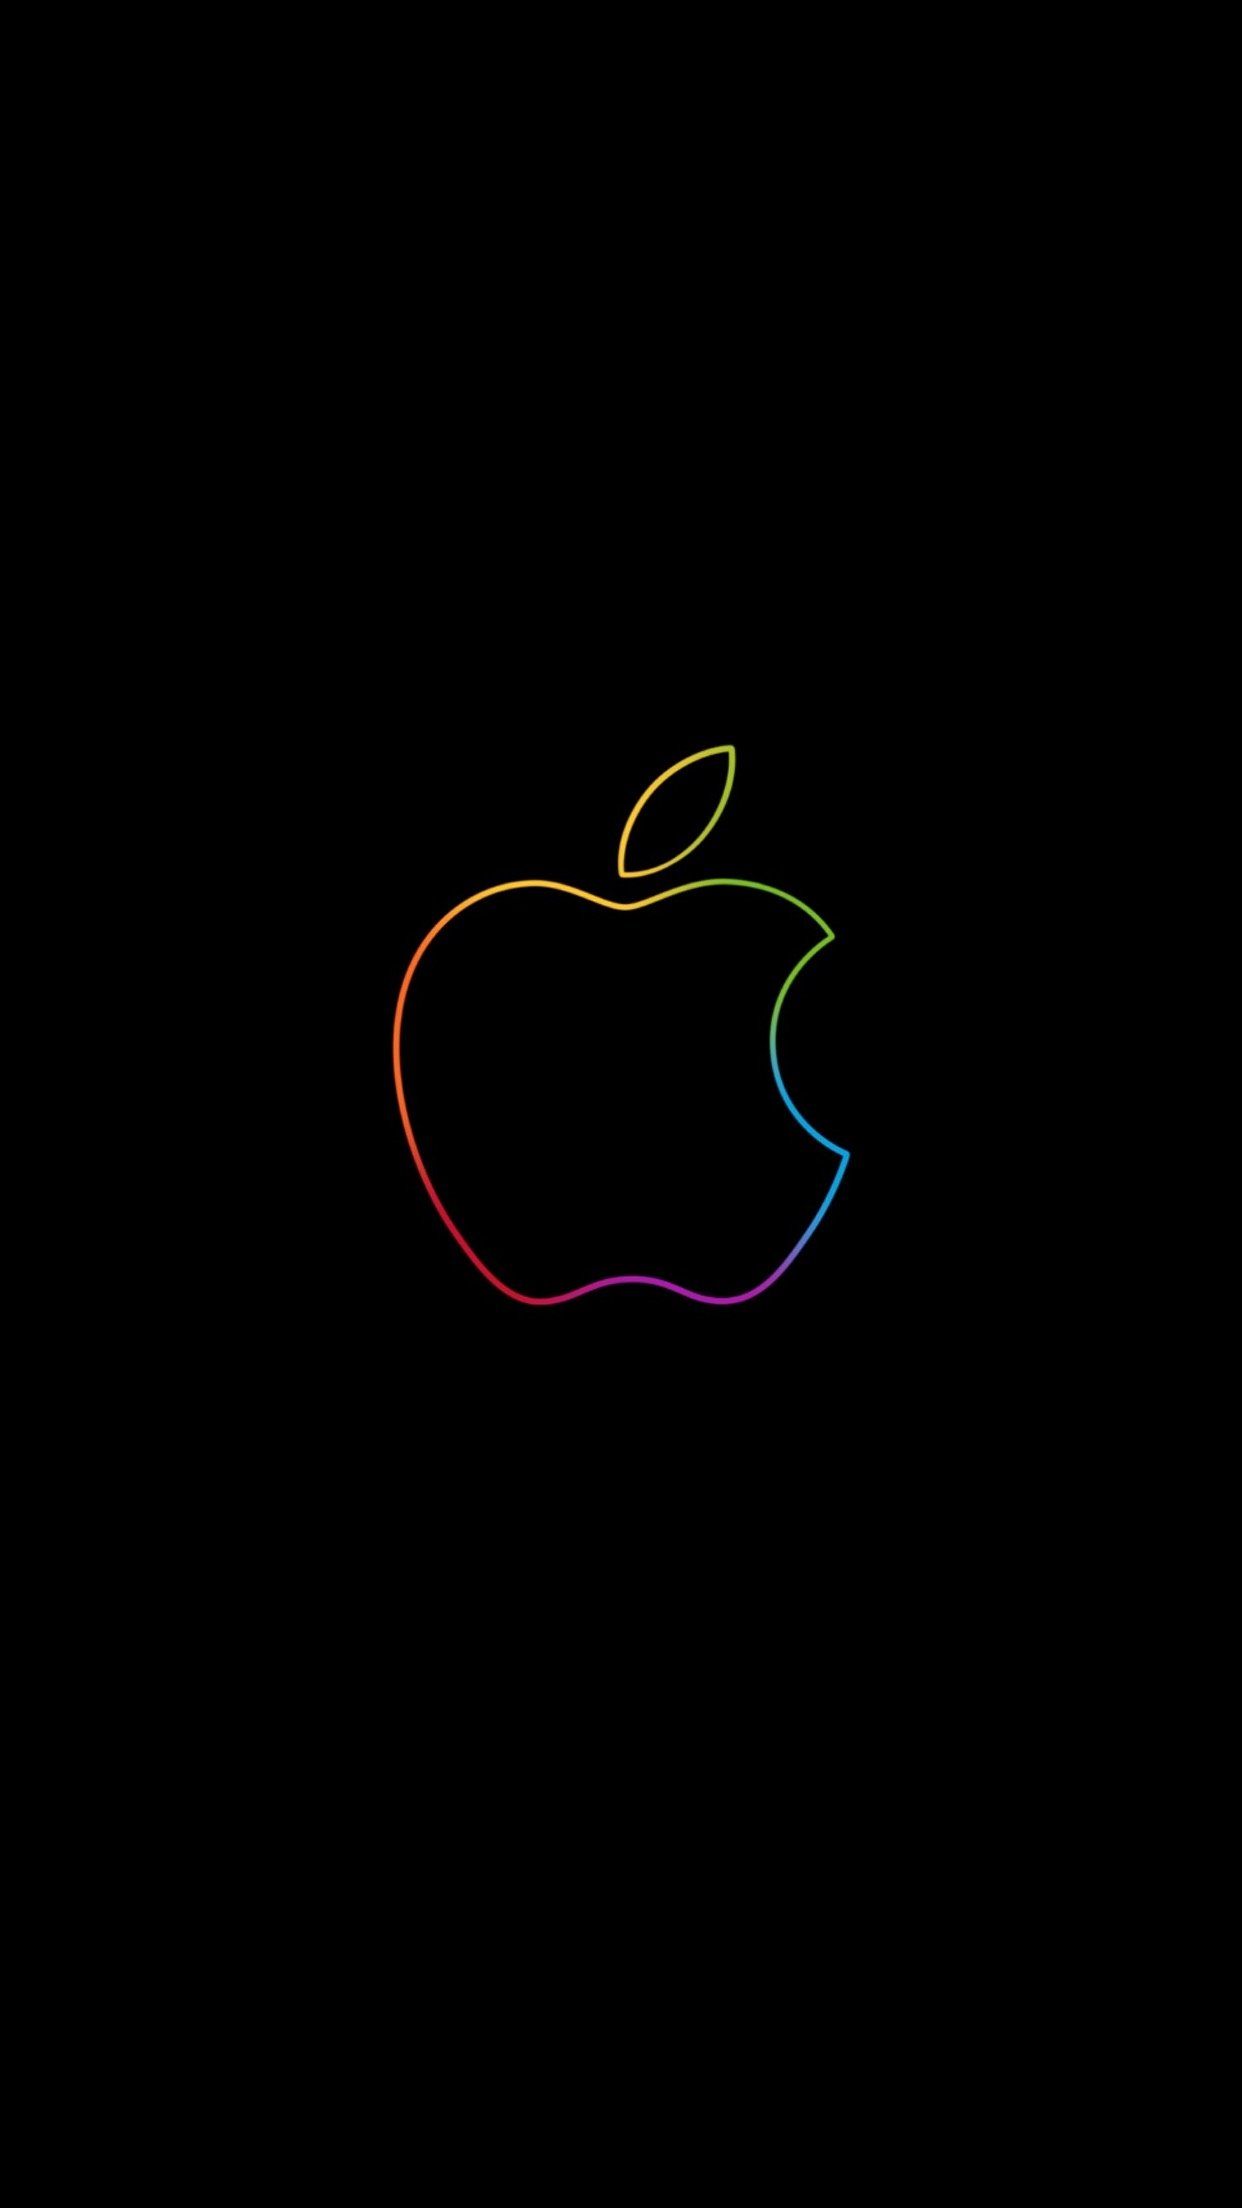 Retro Apple Wallpaper iPhone X